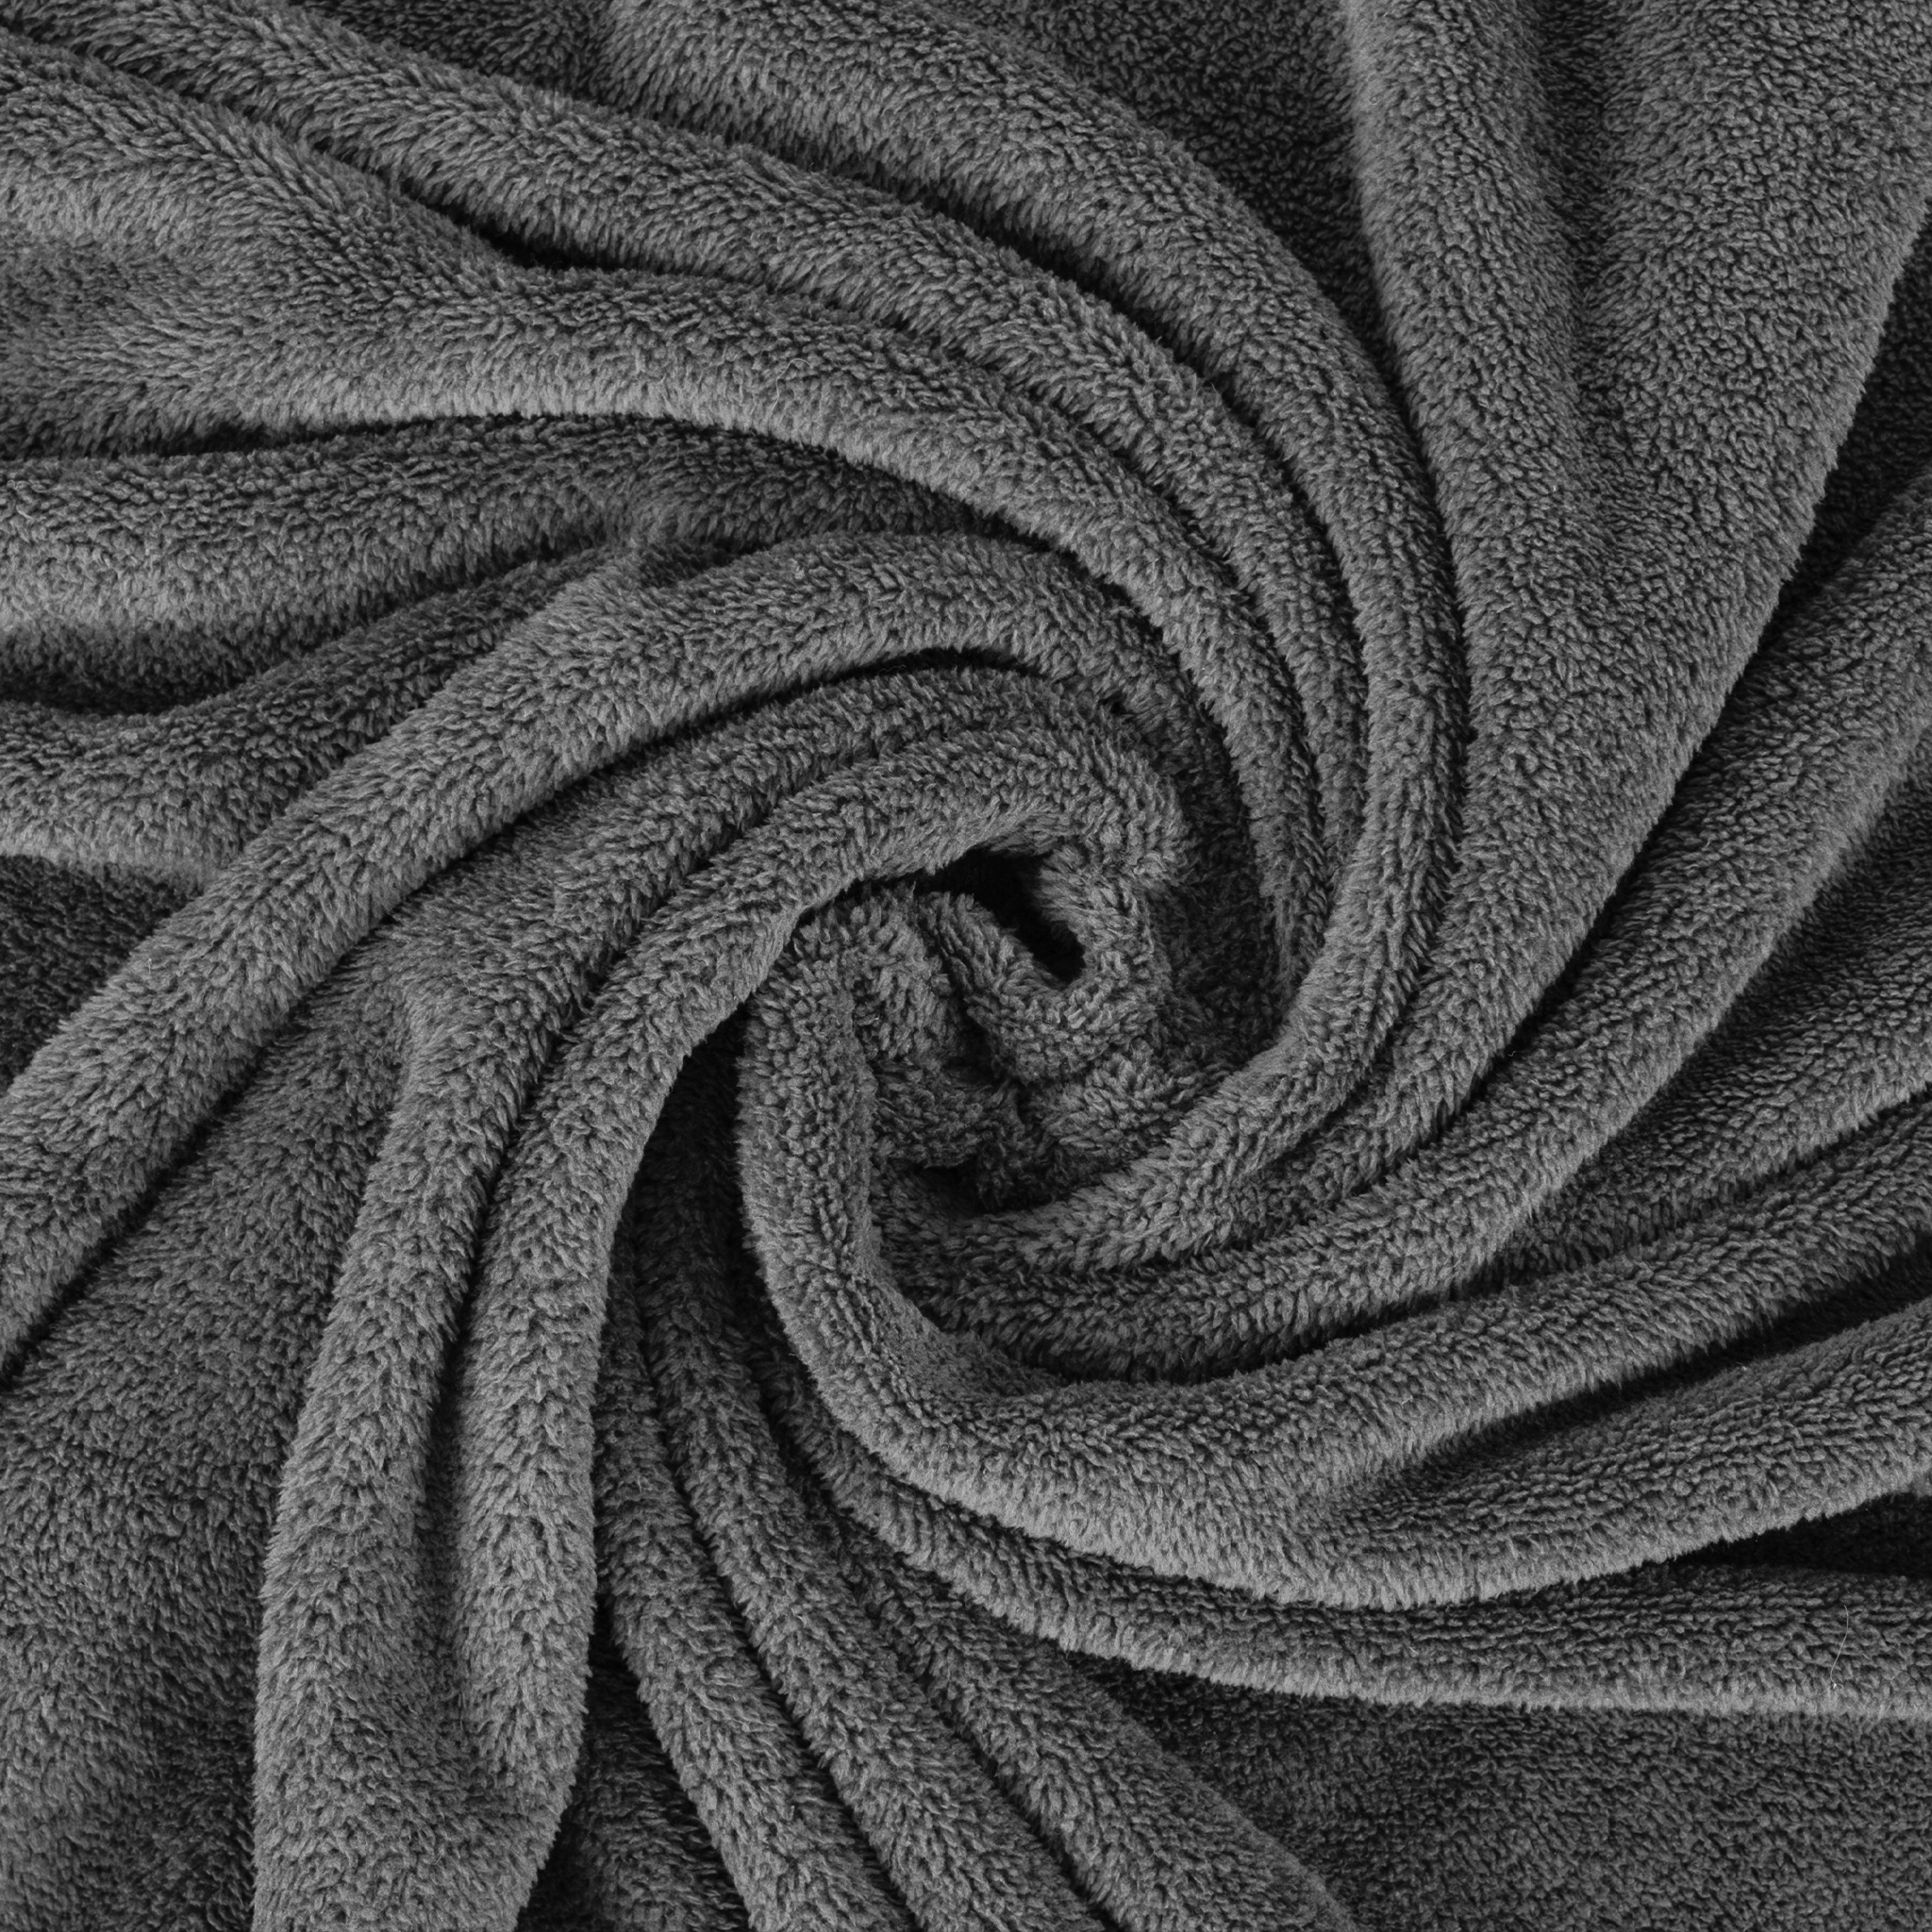 American Soft Linen - Bedding Fleece Blanket - Queen Size 85x90 inches - Gray - 5